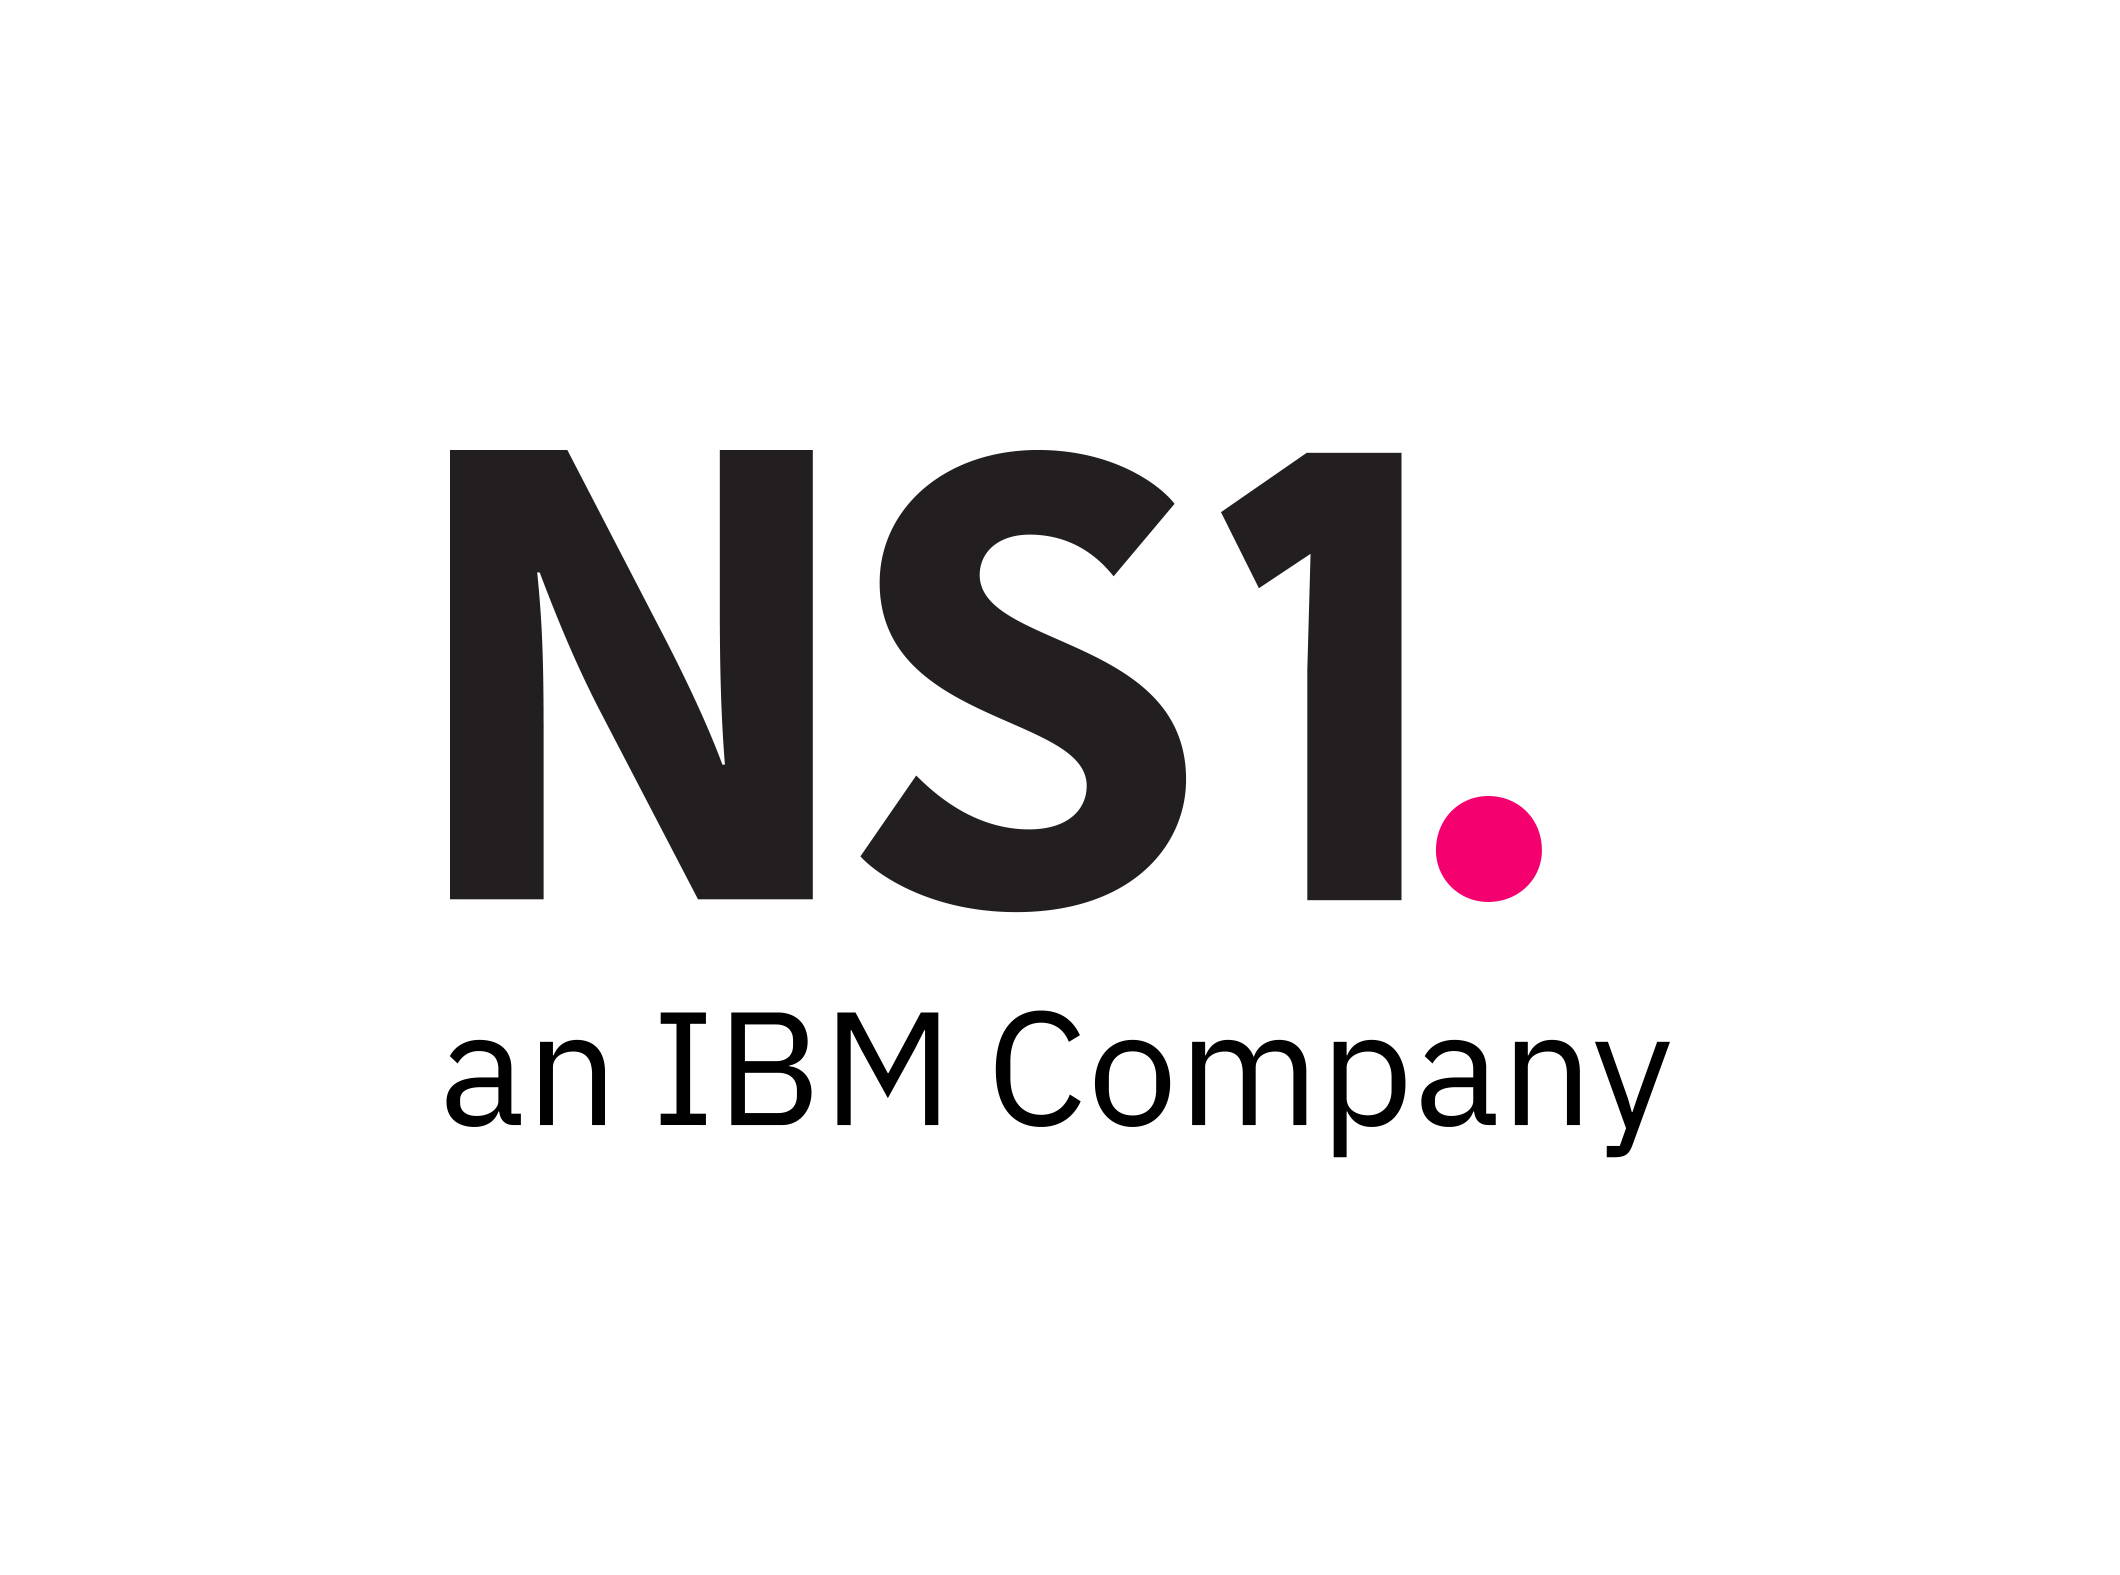 ns1-logo